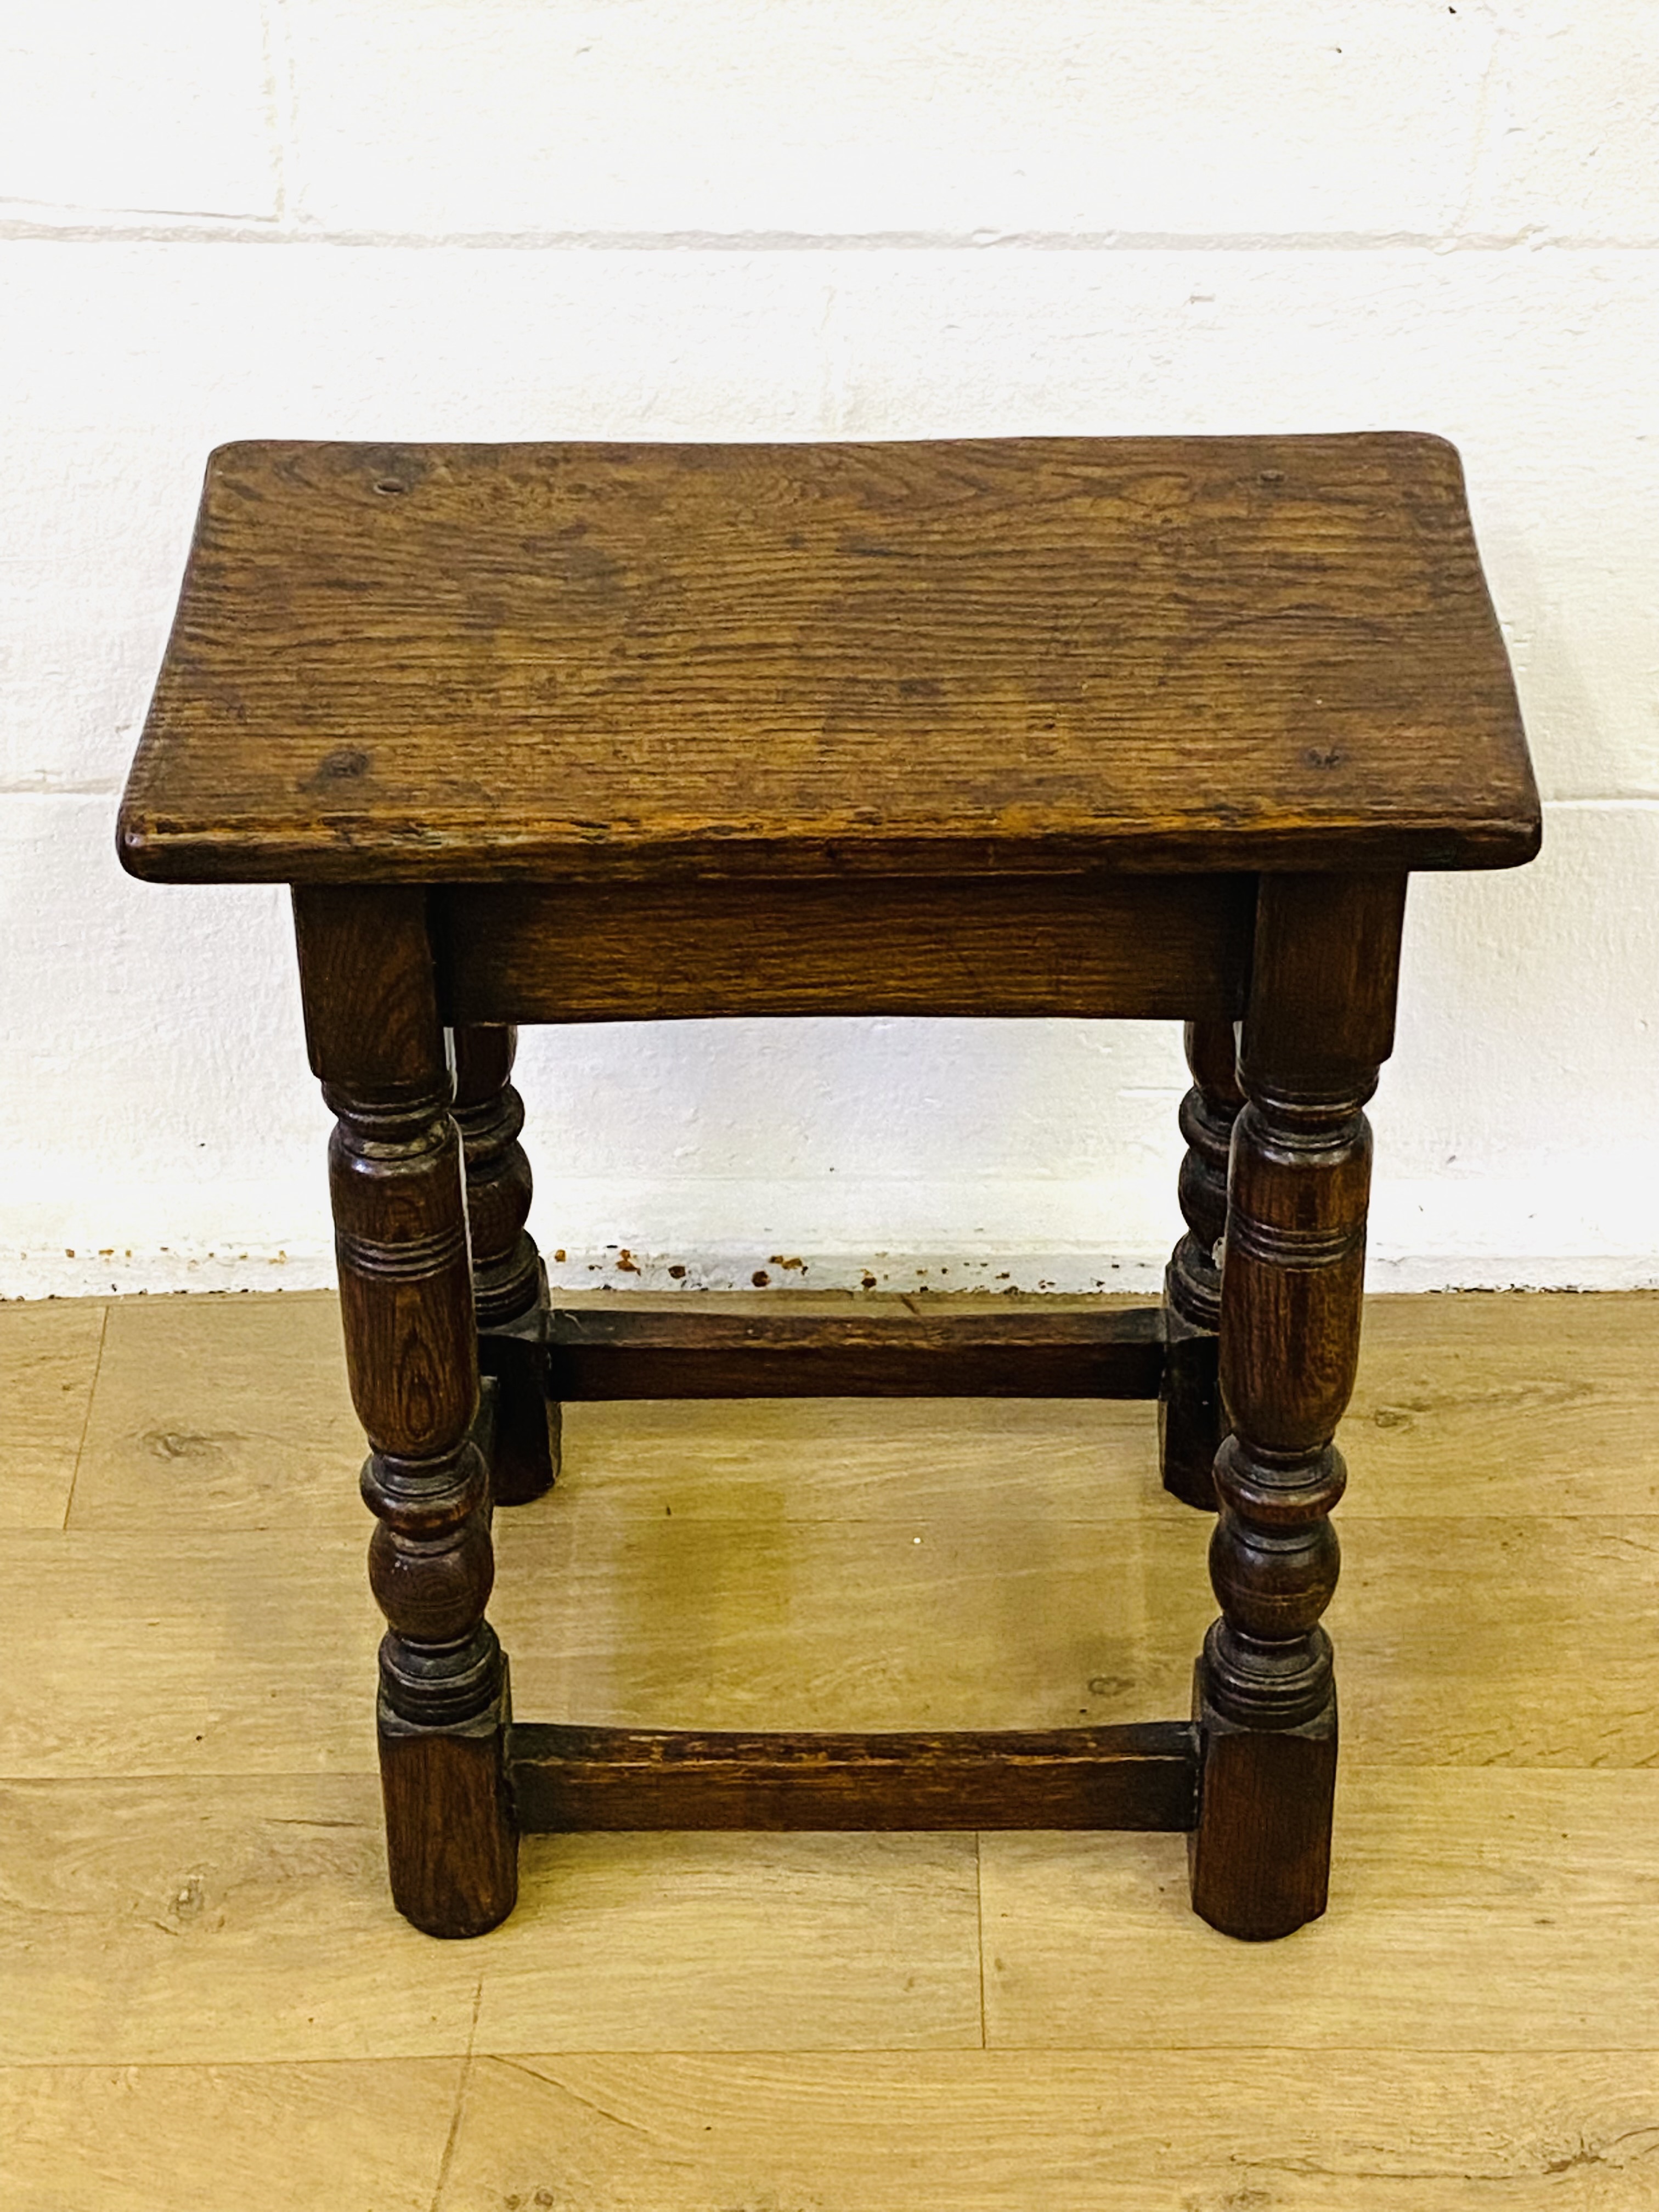 Oak joint stool - Image 4 of 4